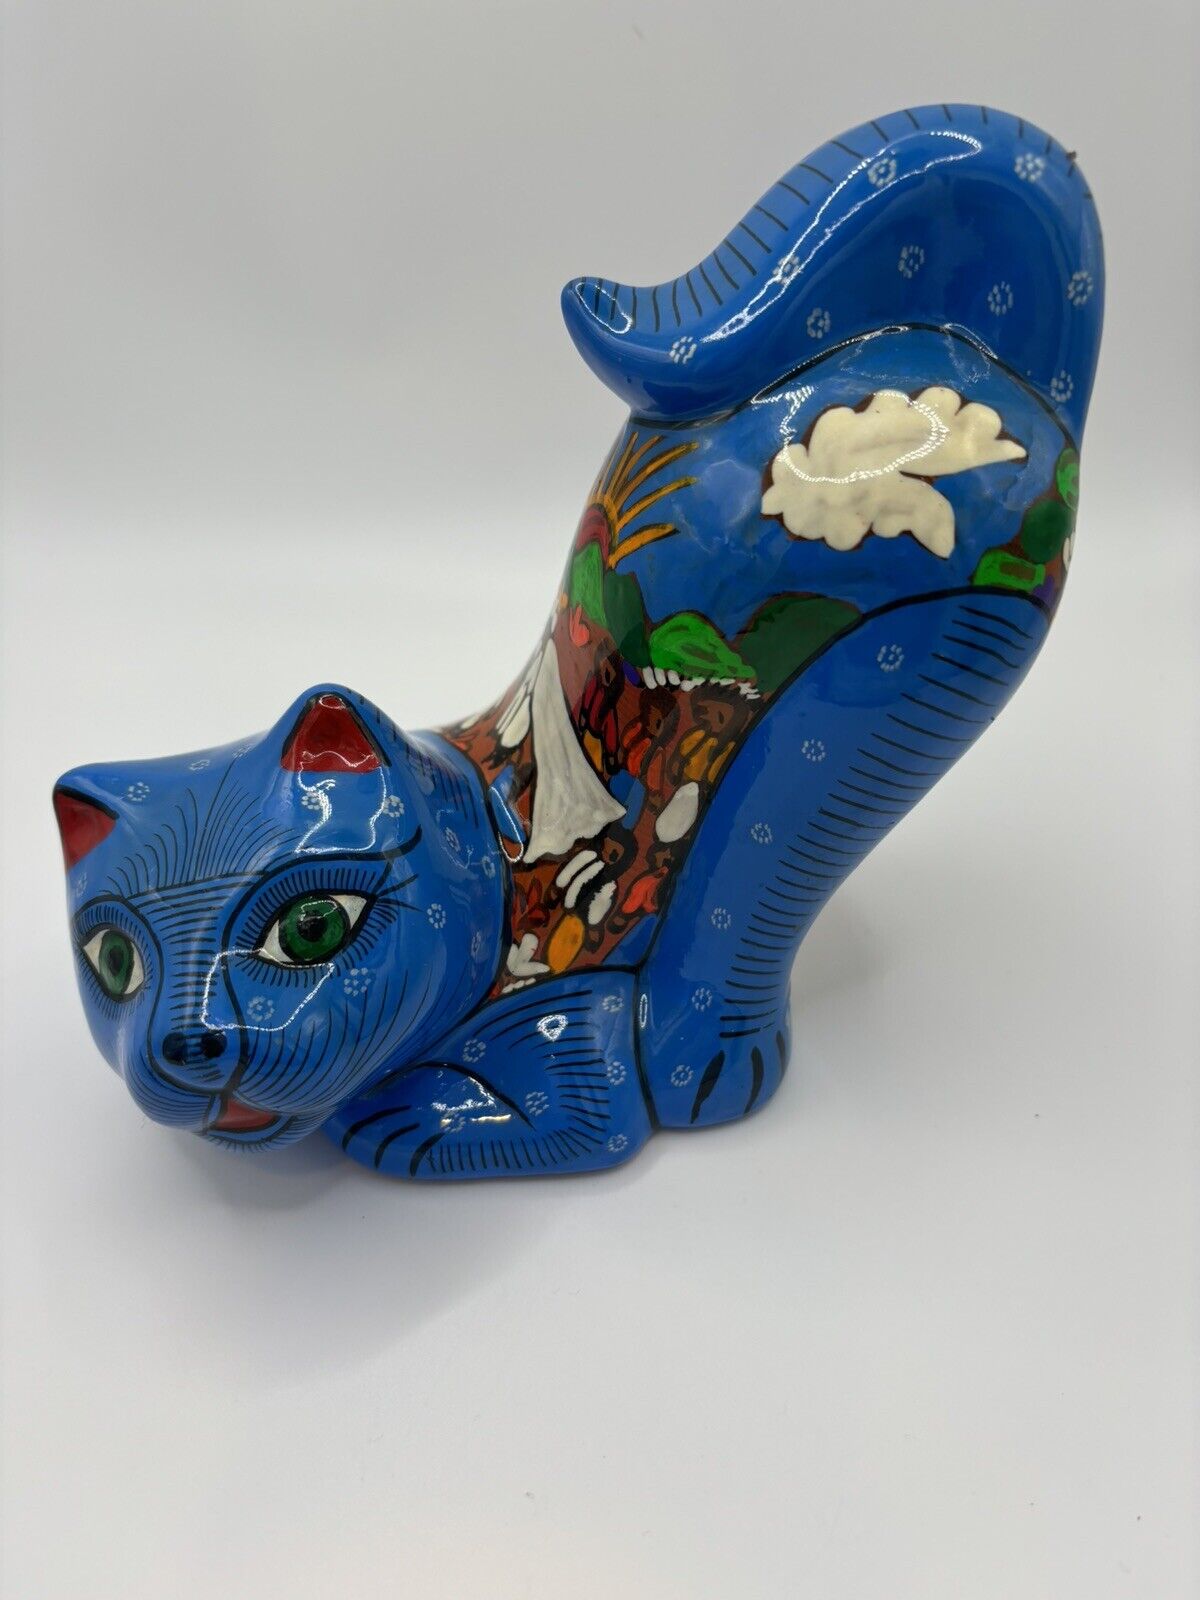 Ceramic Mexican Pottery Cat figurine Unique Vintage Hand painted Blue exc. cond.